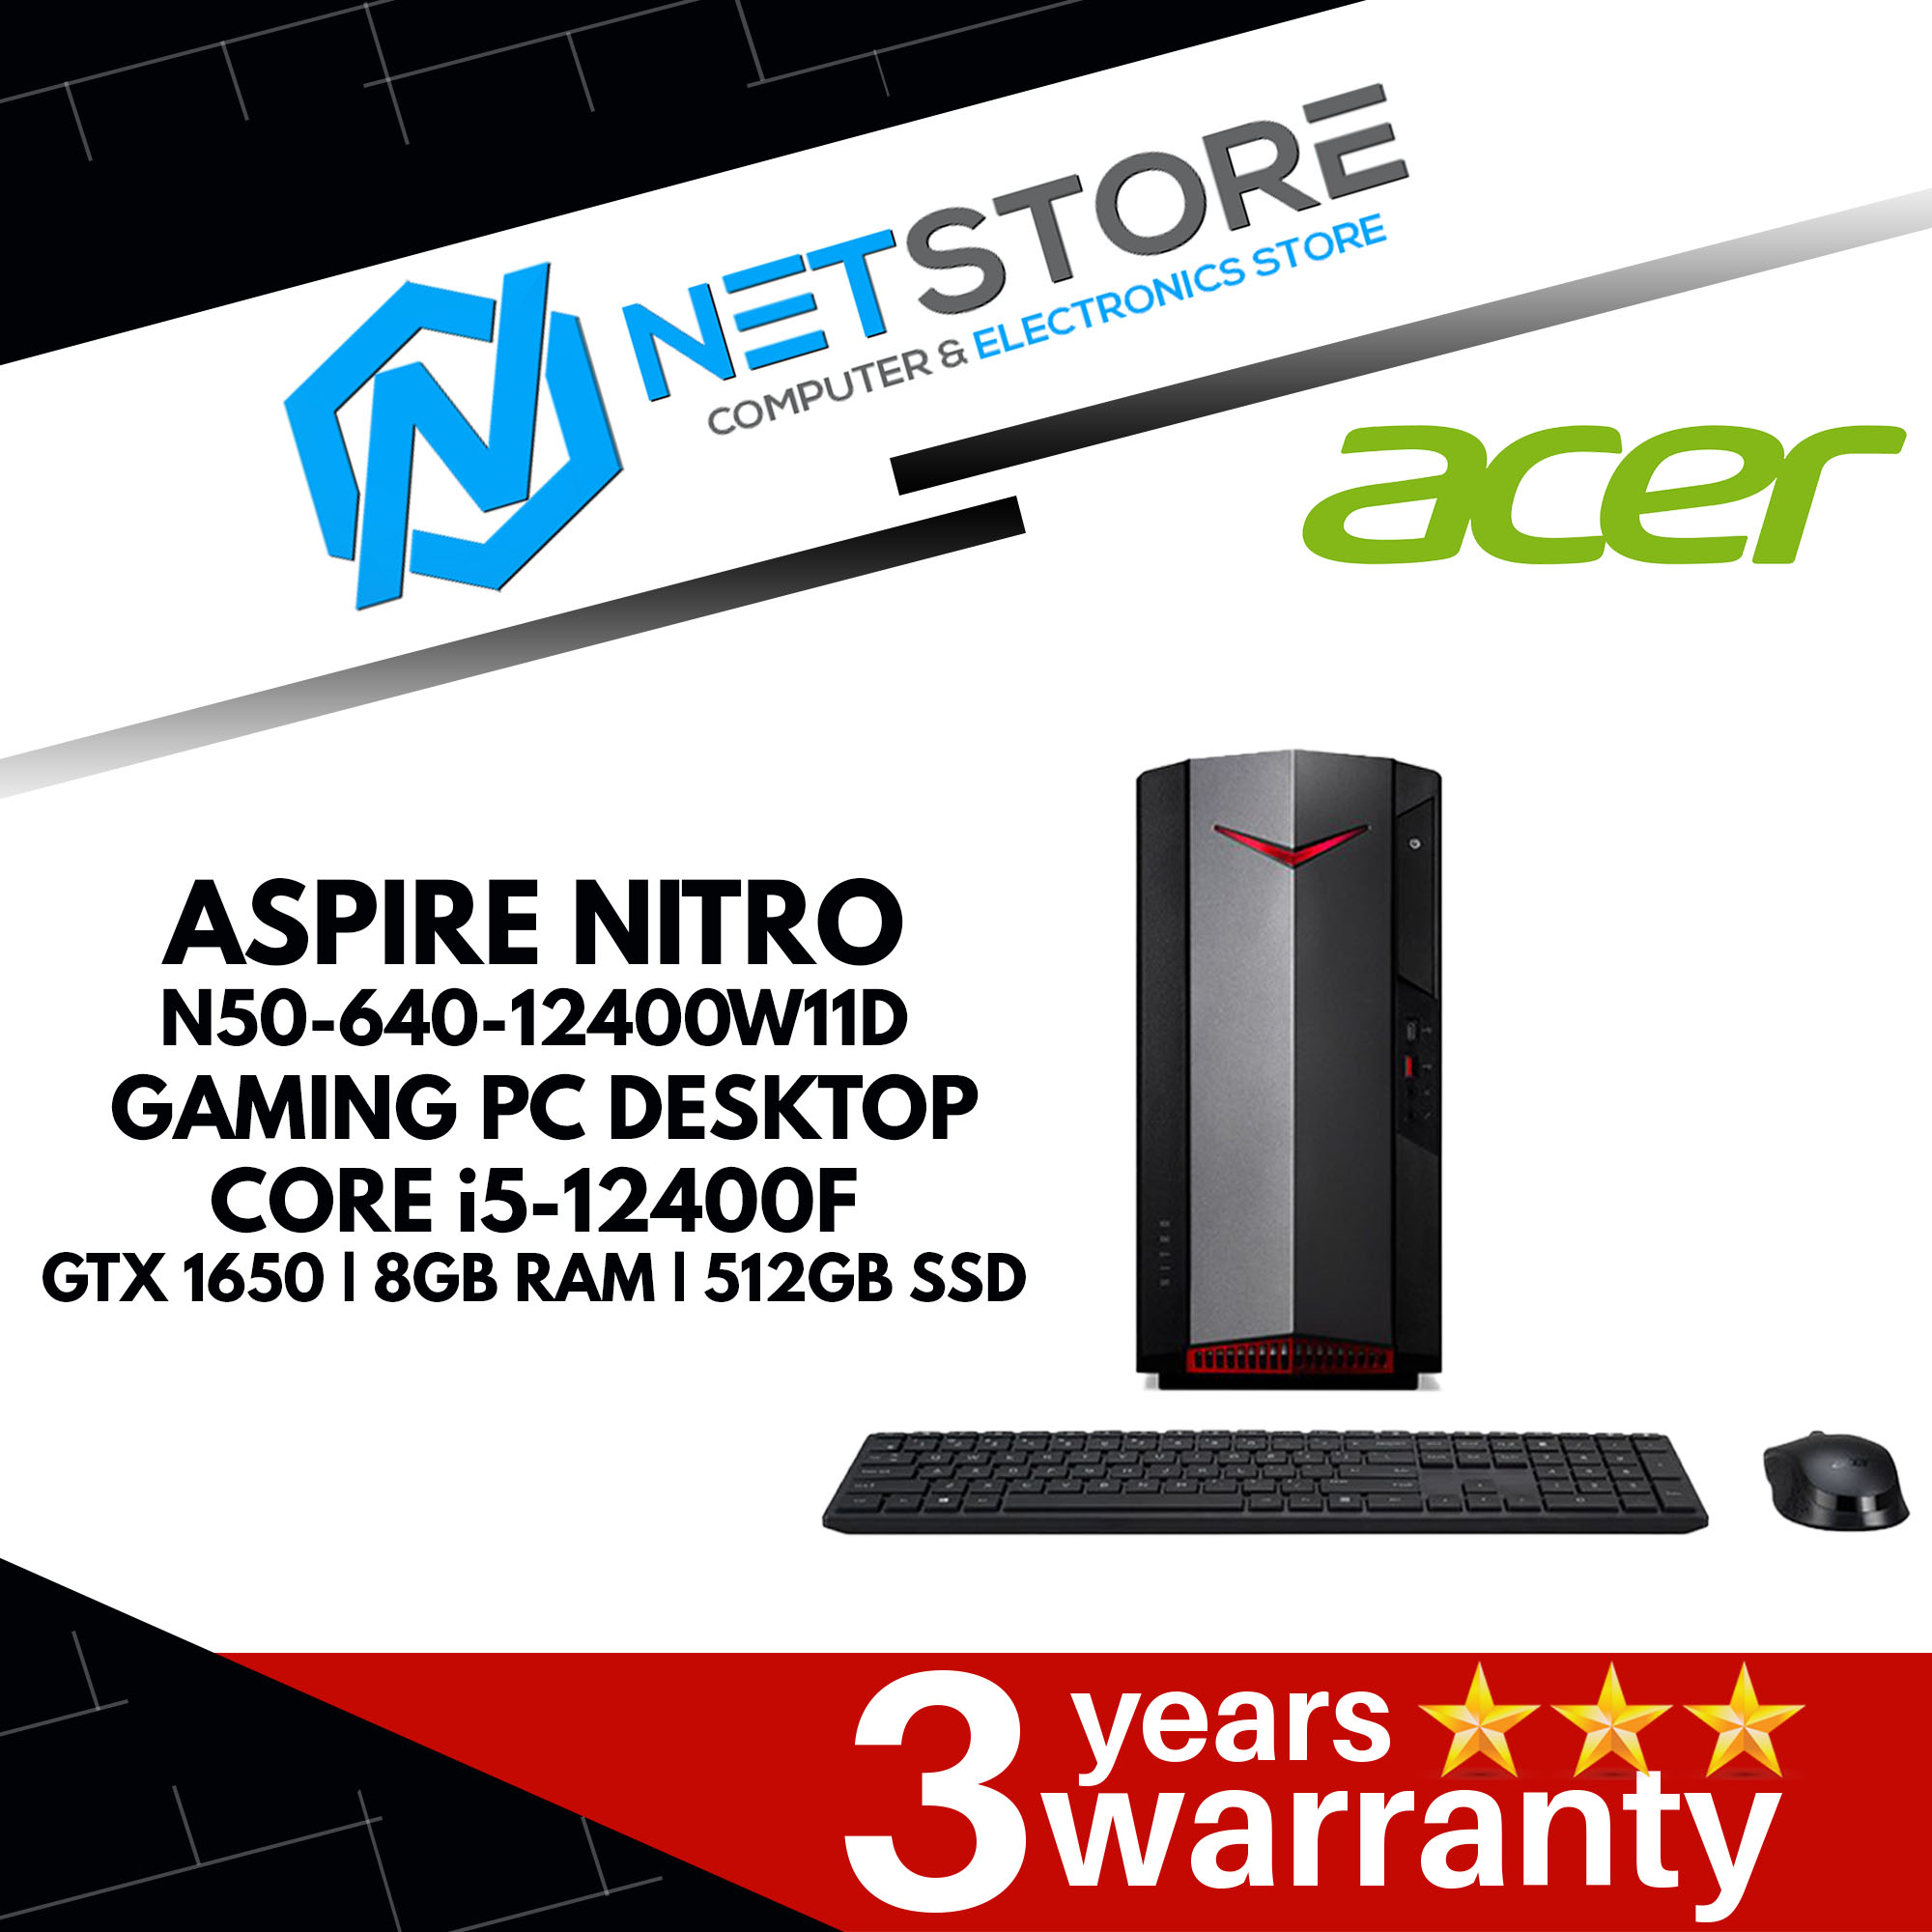 ACER ASPIRE NITRO N50-640-12400W11D GAMING PC DESKTOP - CORE I5-12400F